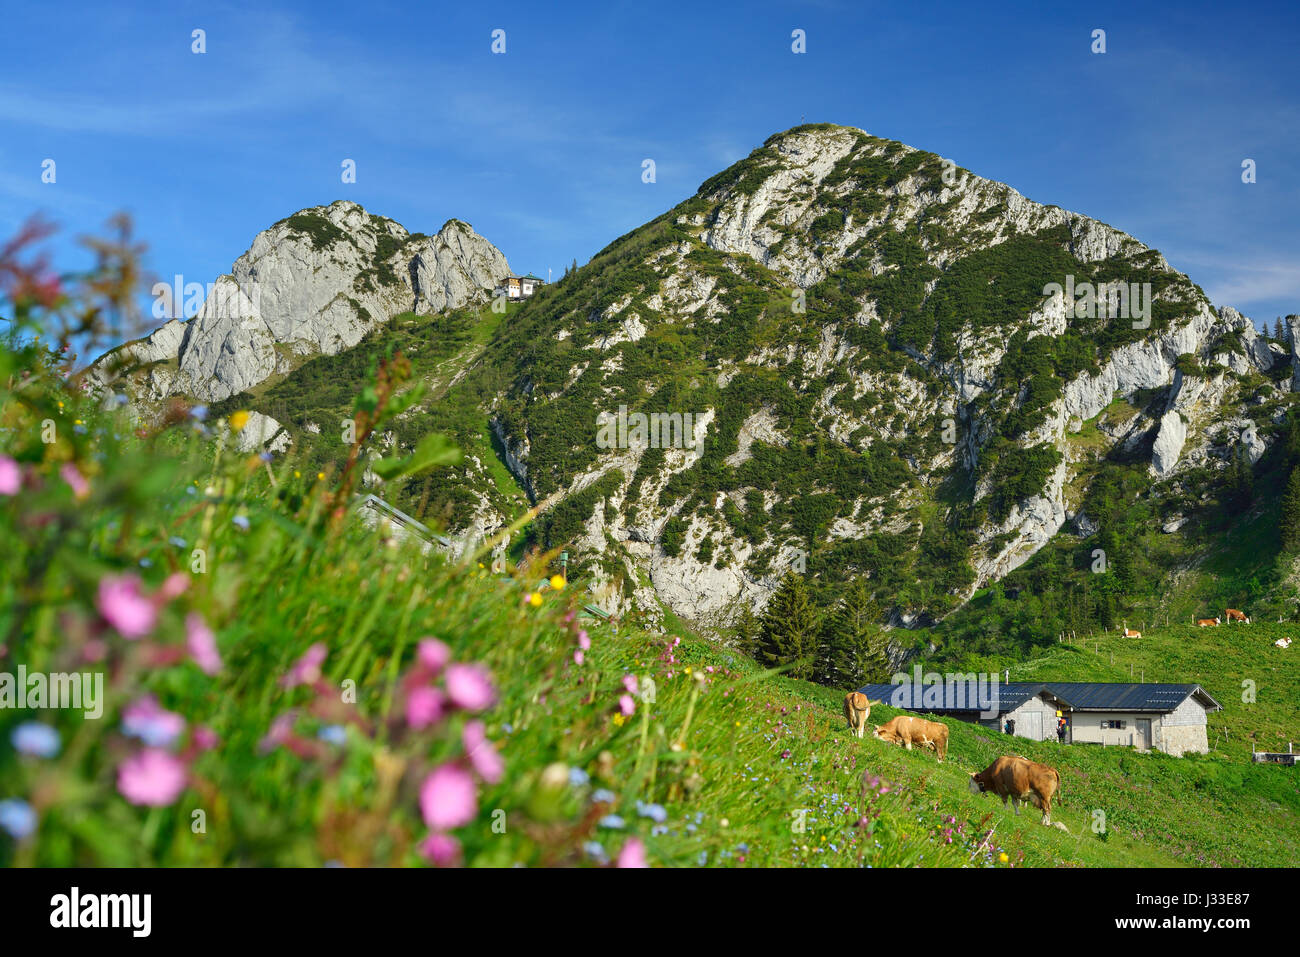 Cattle on alpine pasture, Buchstein and Rossstein in background, Schoenberg, Bavarian Prealps, Upper Bavaria, Bavaria, Germany Stock Photo